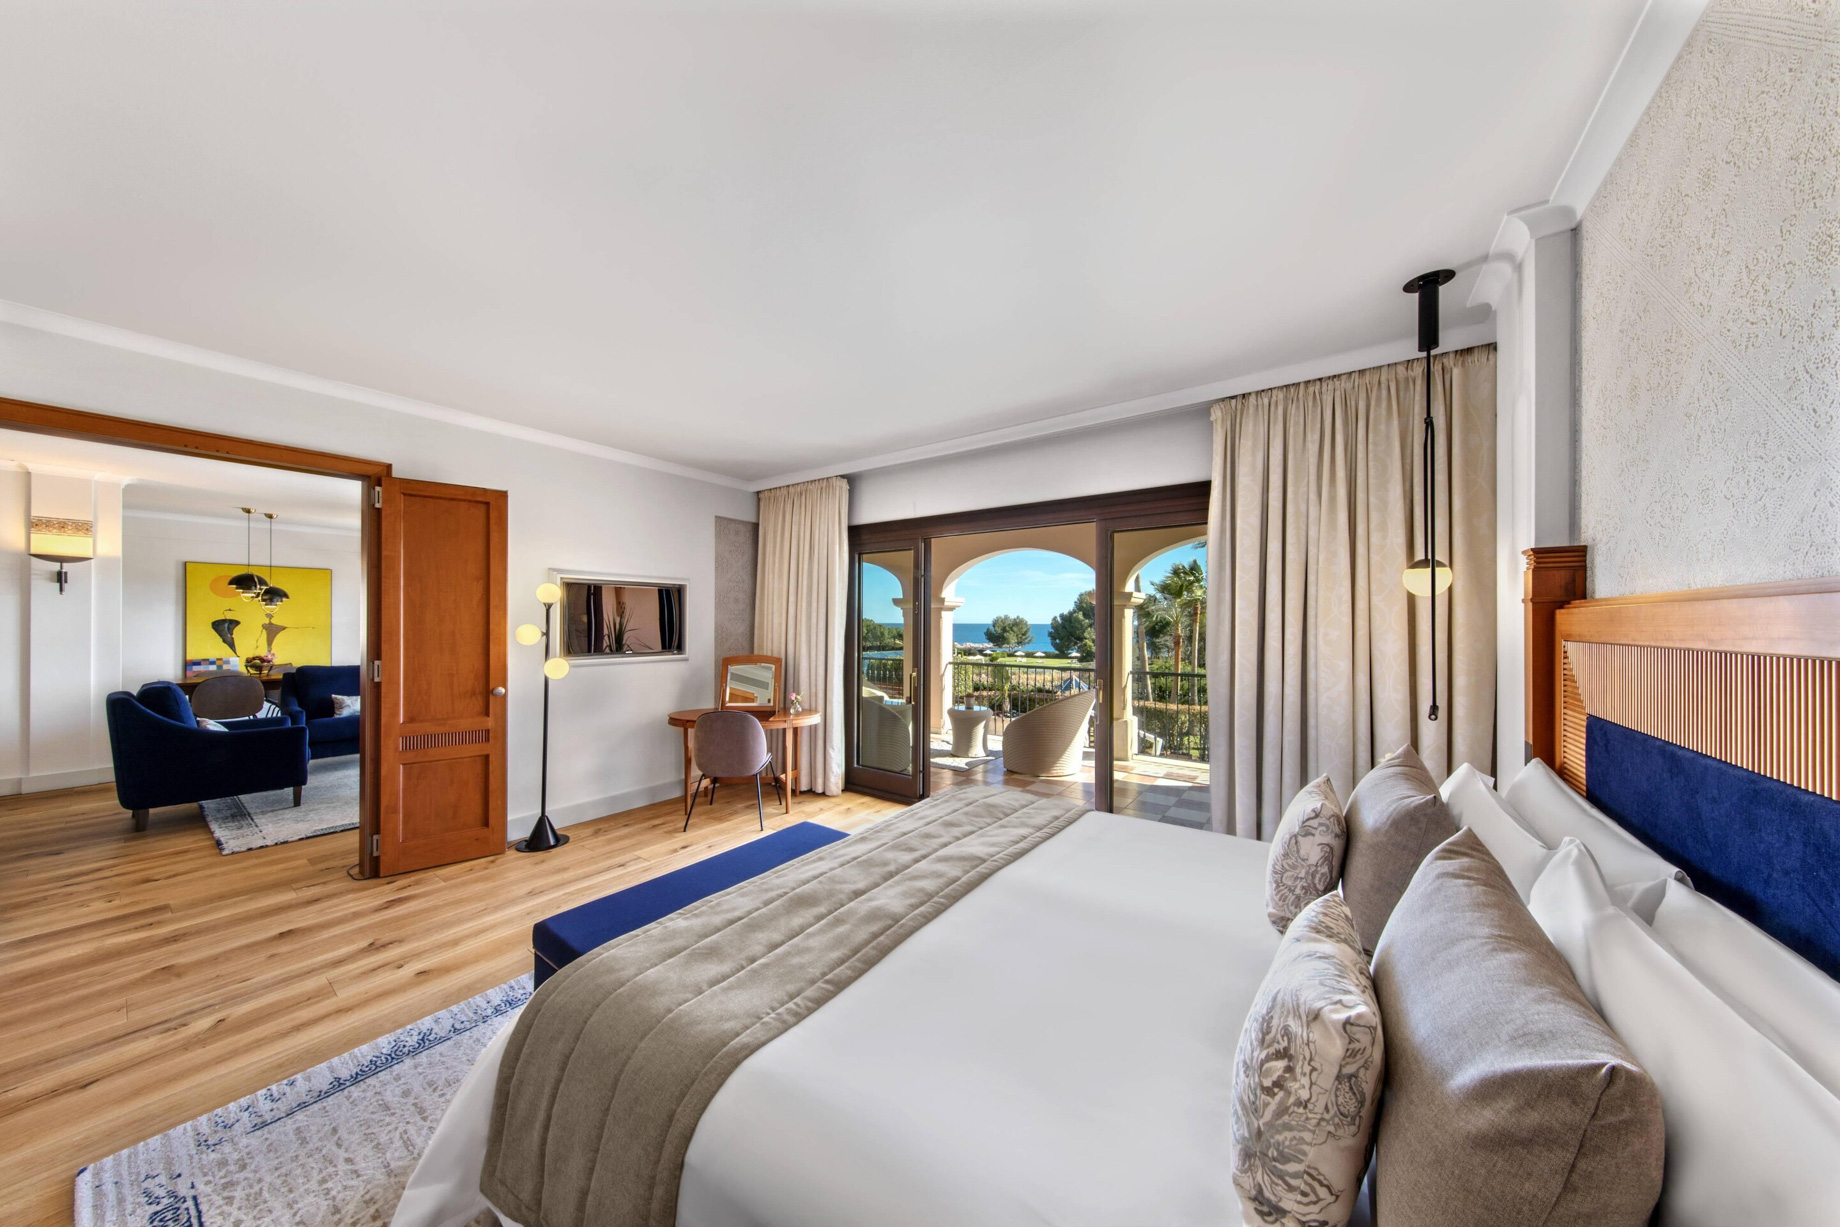 The St. Regis Mardavall Mallorca Resort – Palma de Mallorca, Spain – One Bedroom Ocean Suite